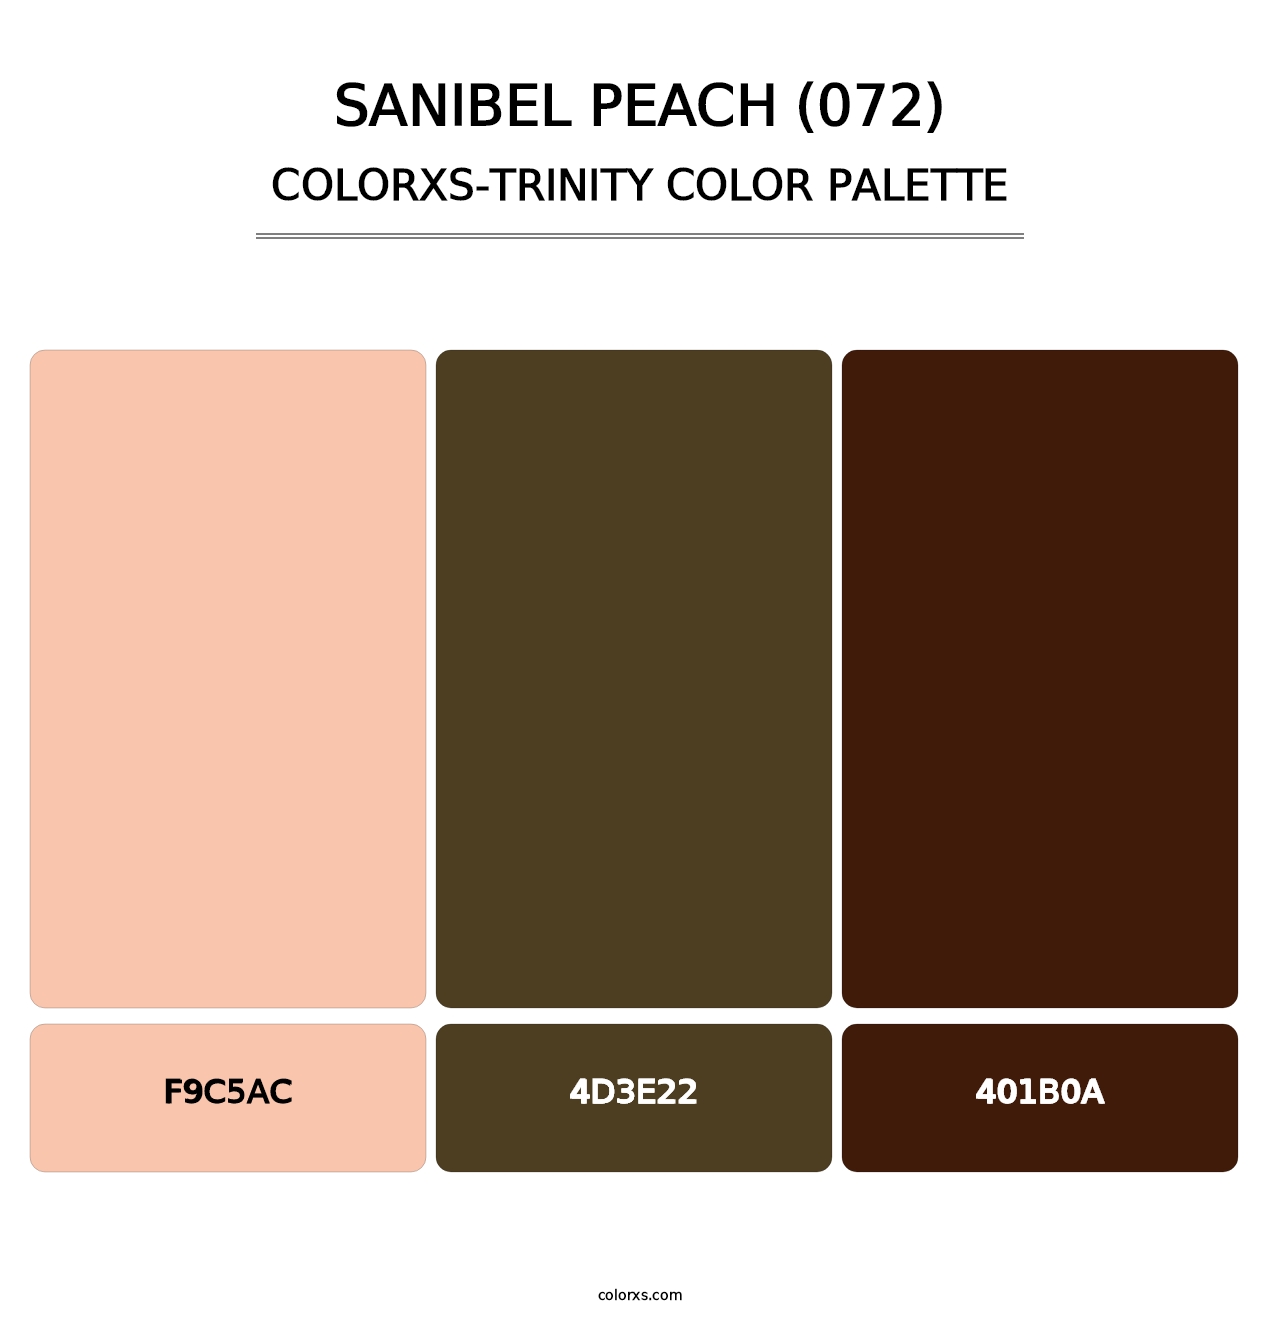 Sanibel Peach (072) - Colorxs Trinity Palette